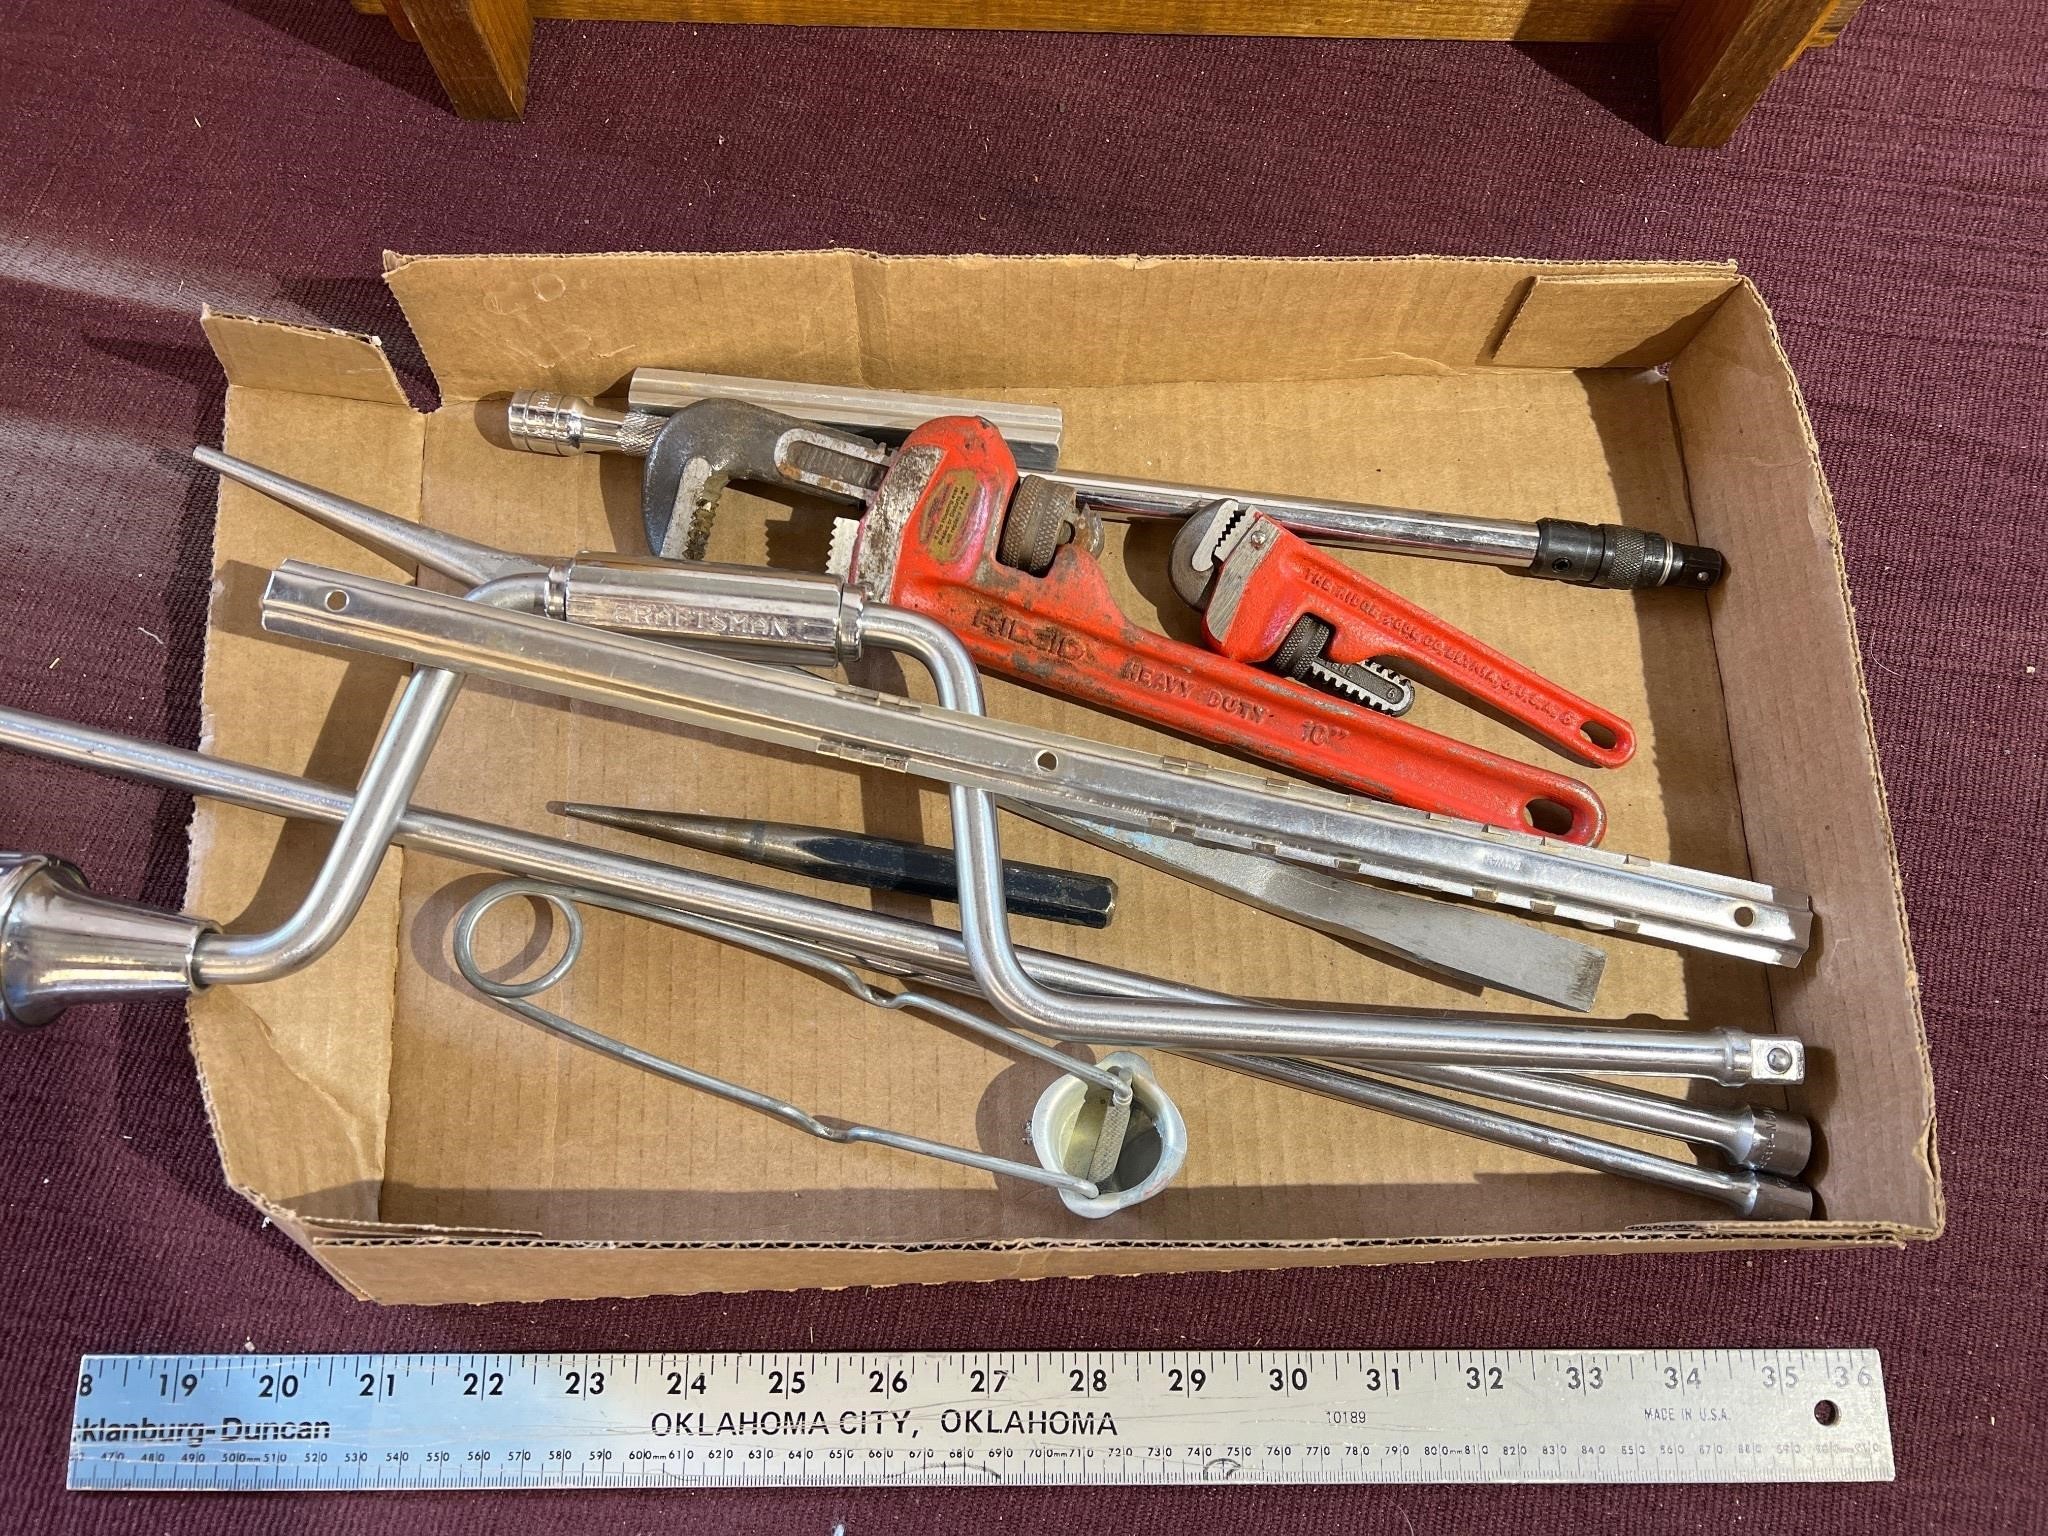 Flat of tools